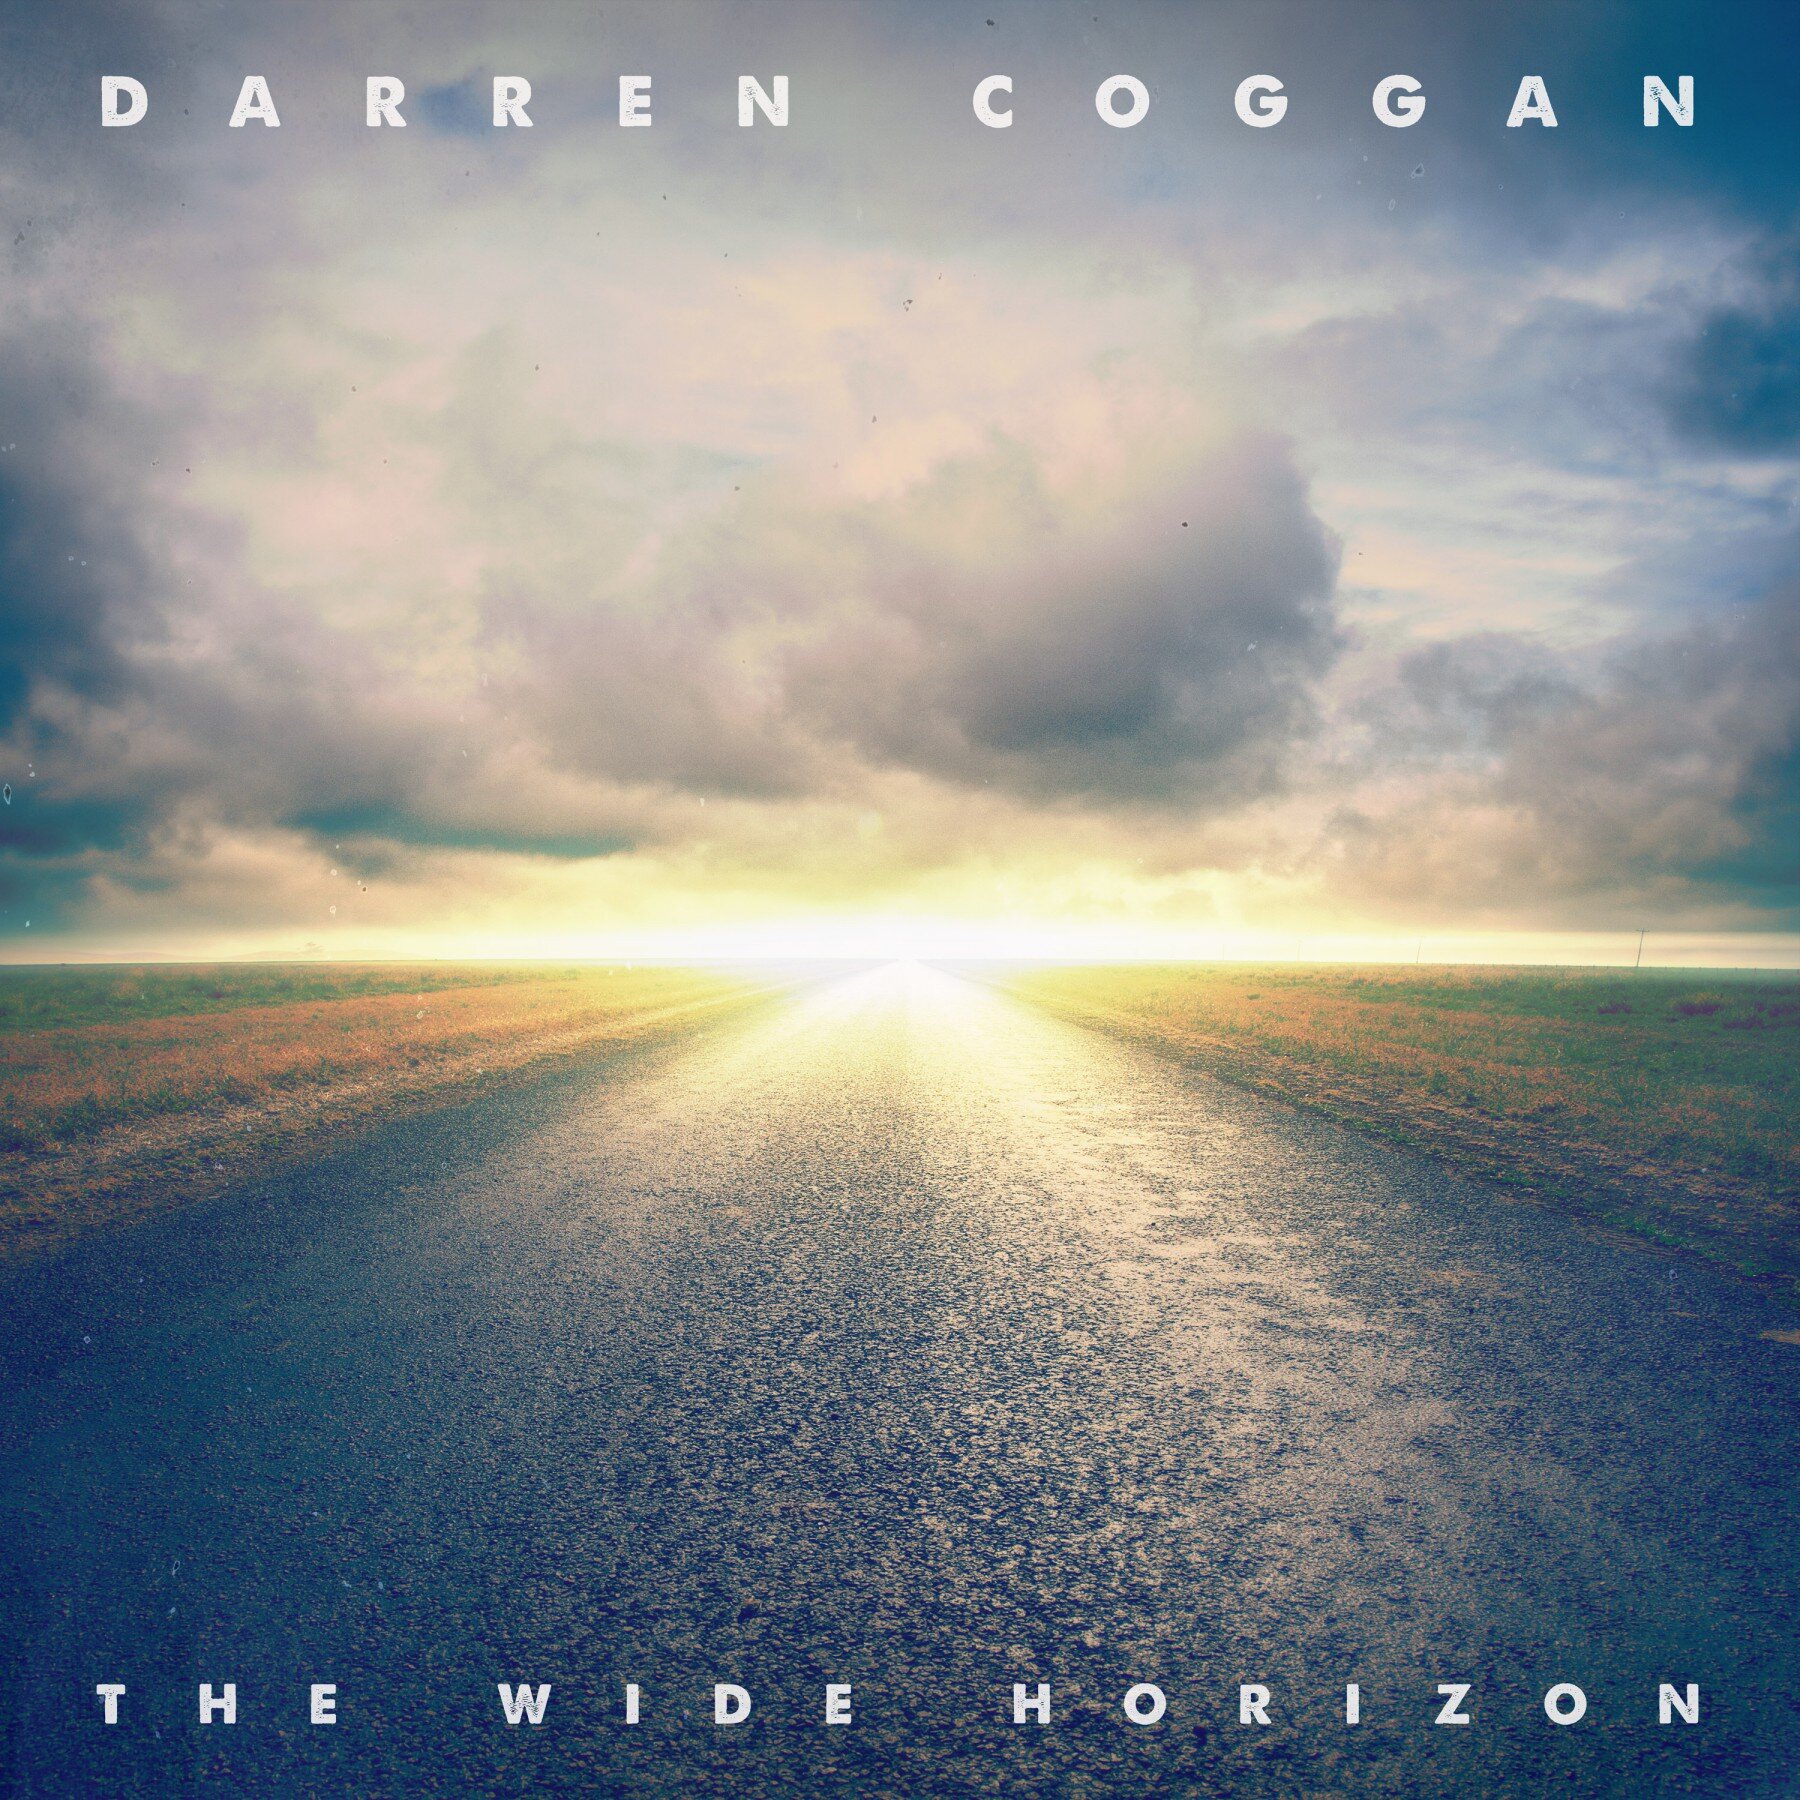 Darren-Coggan-wide-horizon-high-res-3000x3000-Max-Width-2400-Max-Height-1800.jpg